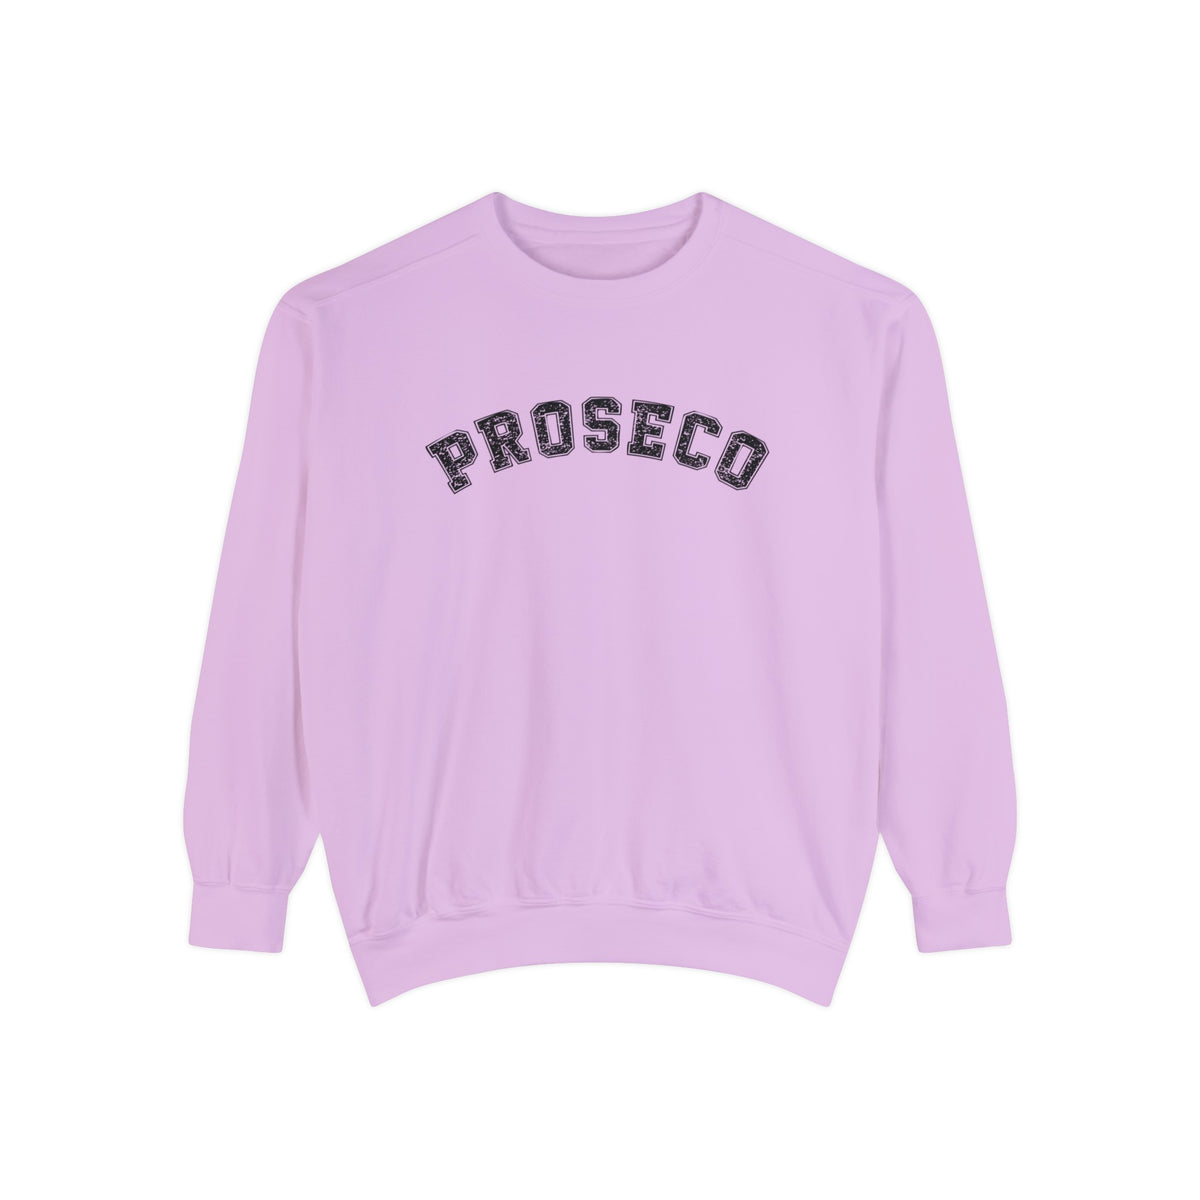 Proseco Italian Shirt | Funny Italian Food Shirt | Italy Lover Gift | Unisex Garment-Dyed Sweatshirt